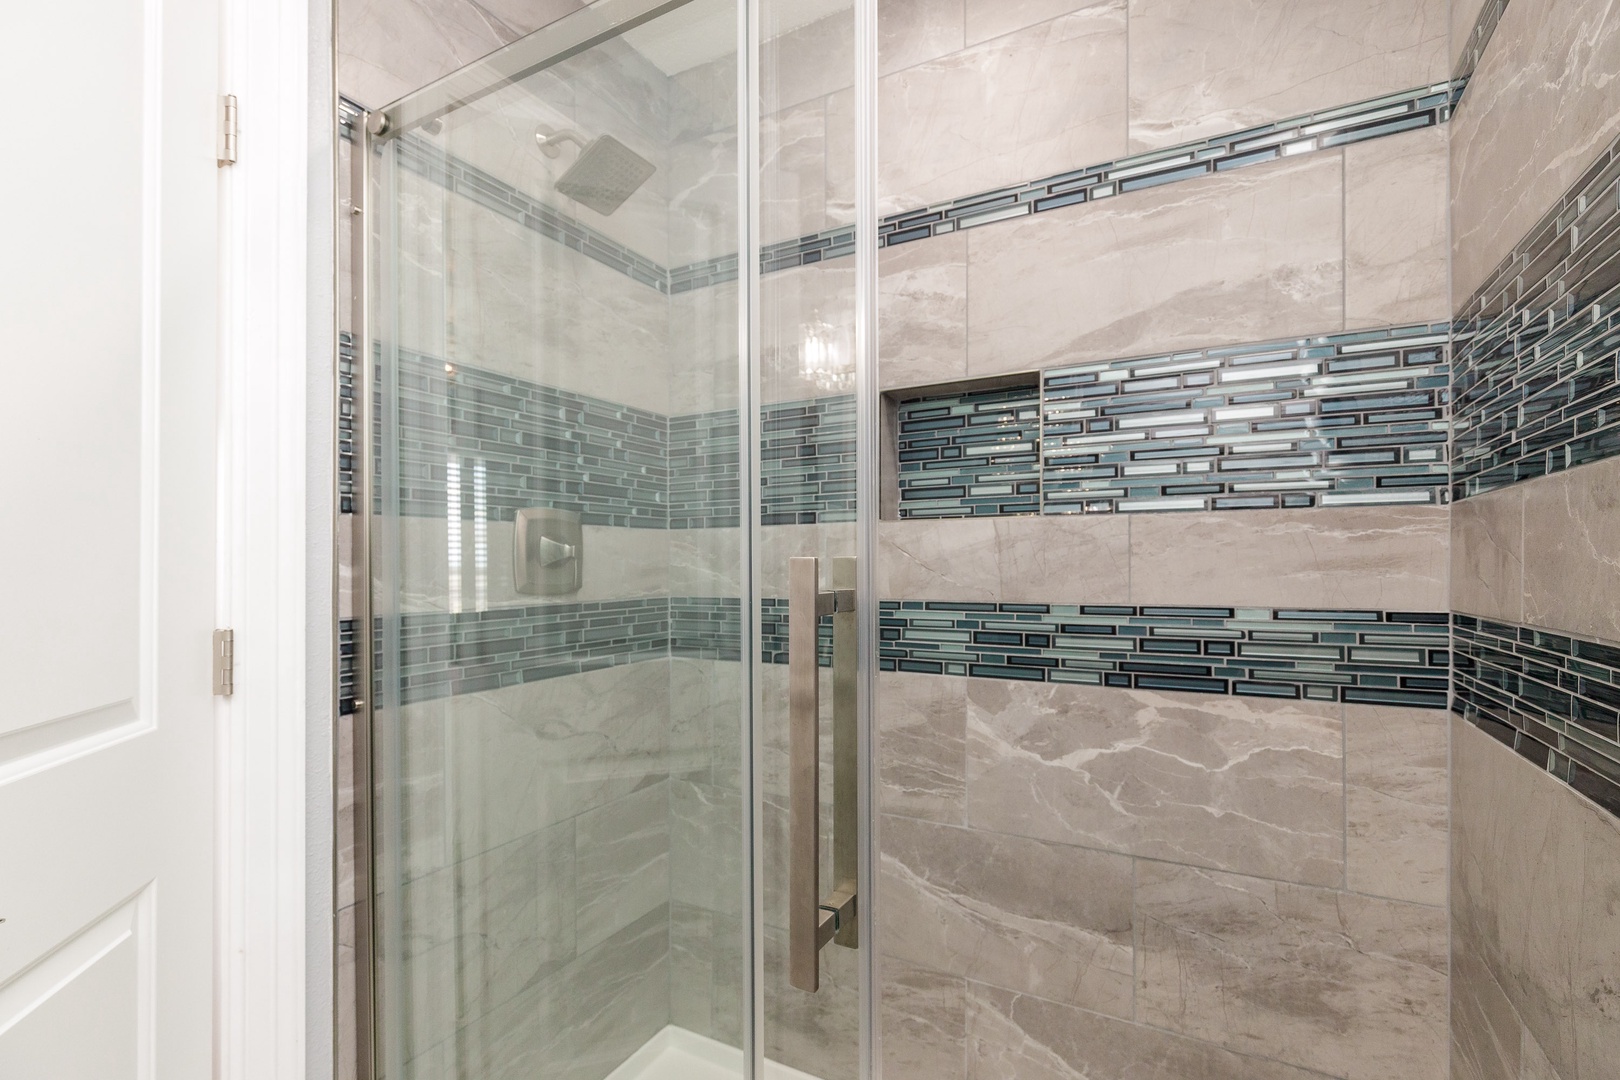 The king en suite bathroom includes a single vanity & glass shower